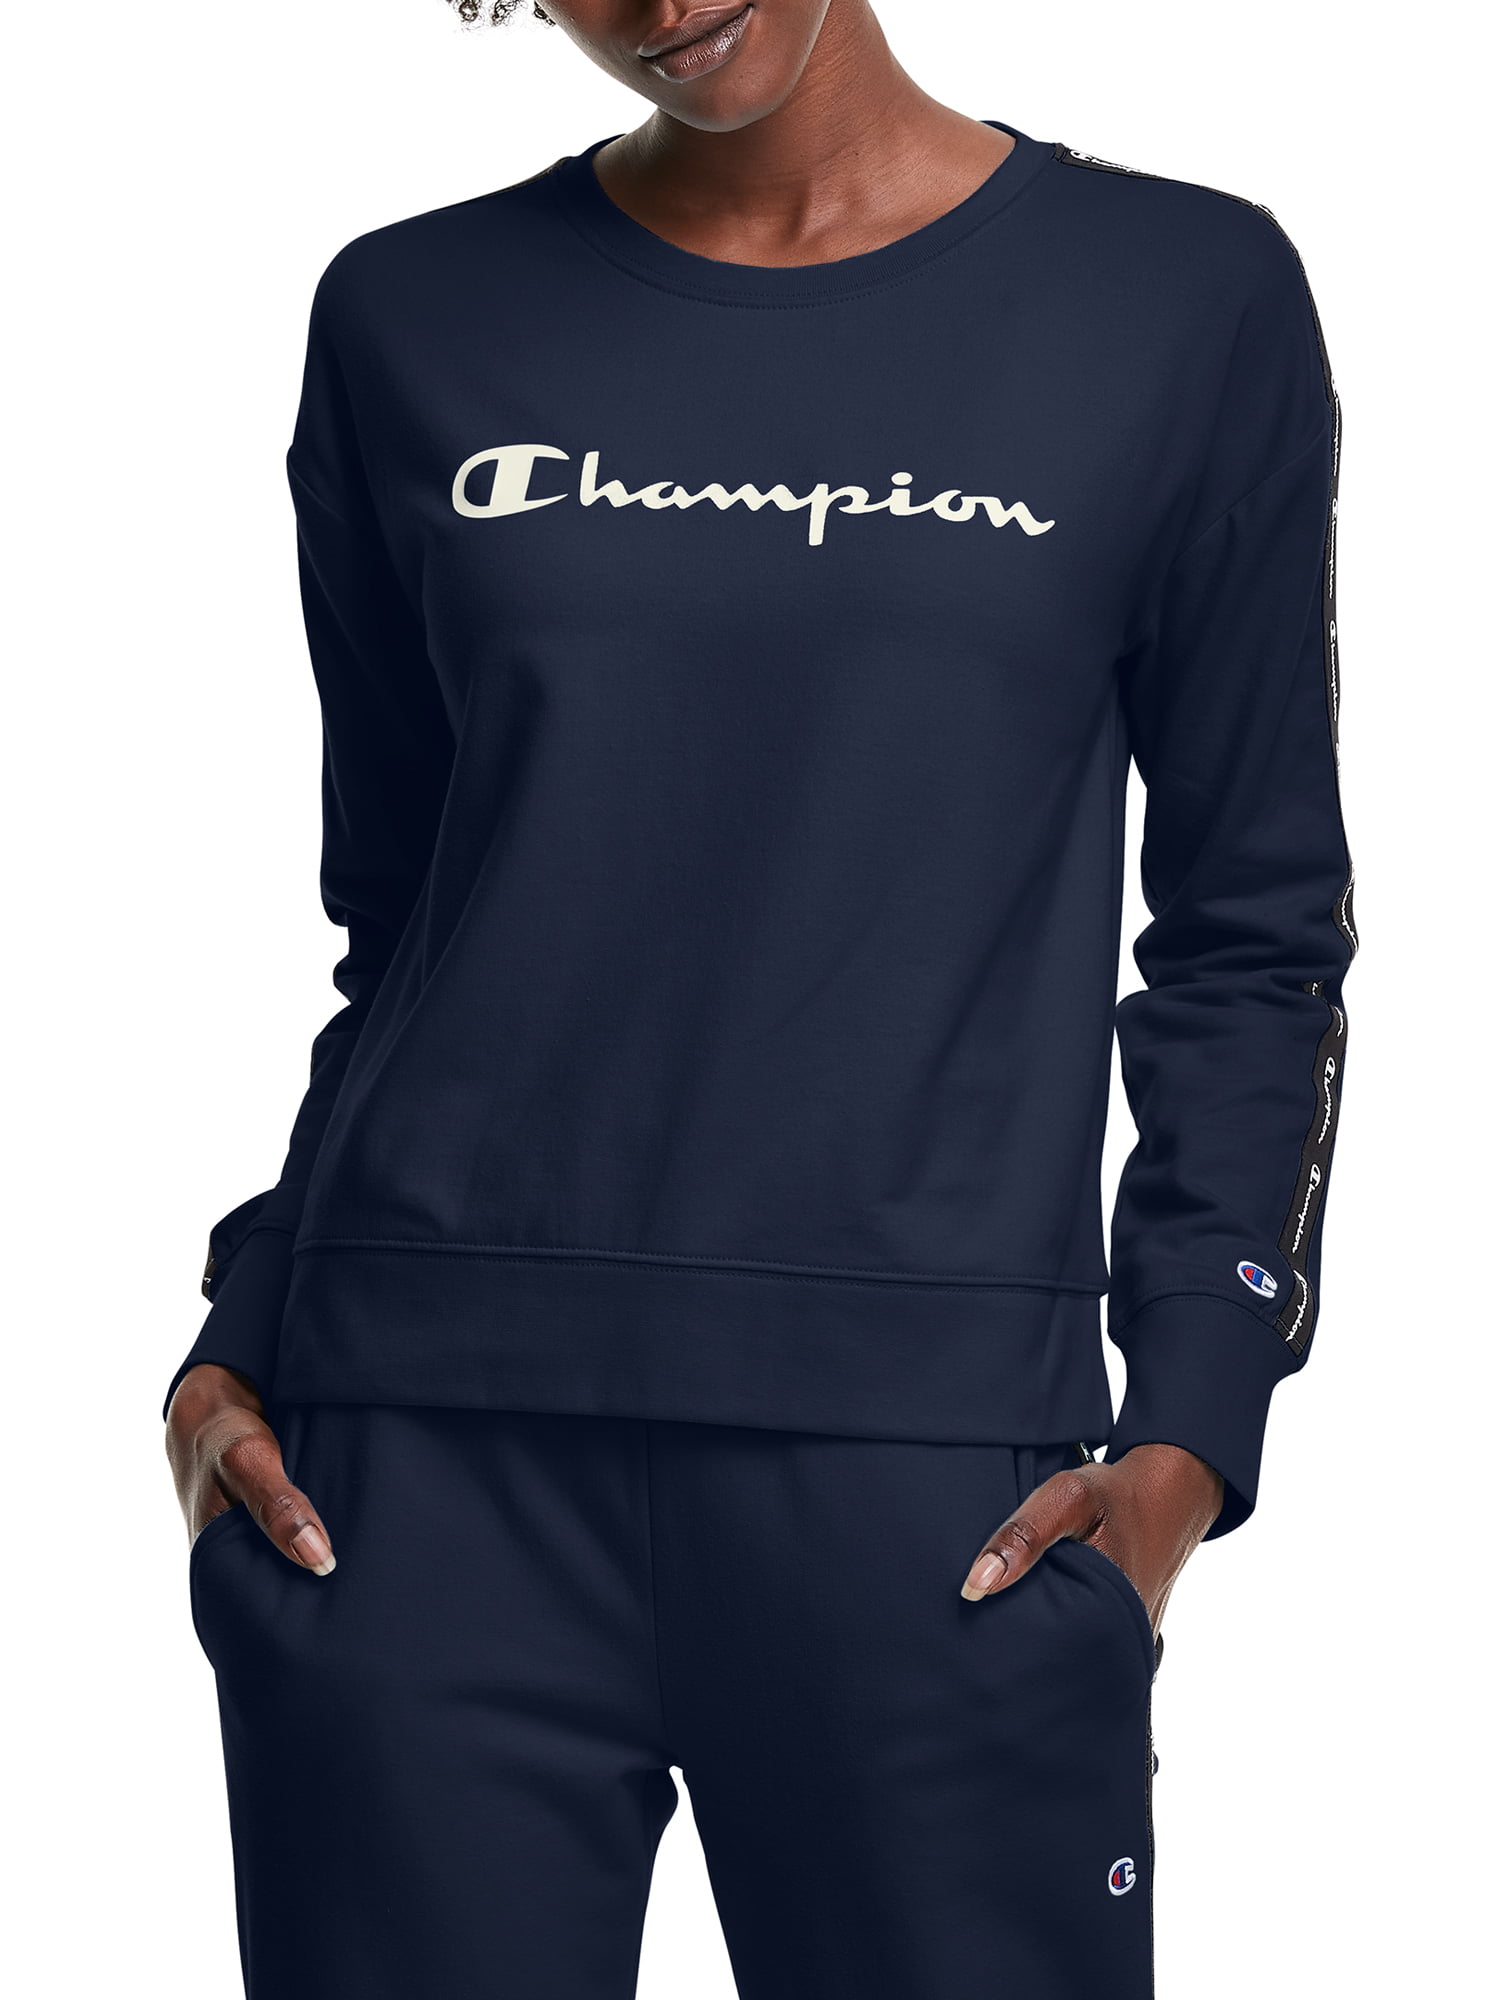 Champion Women's Heritage Crew Sweatshirt with Taping 